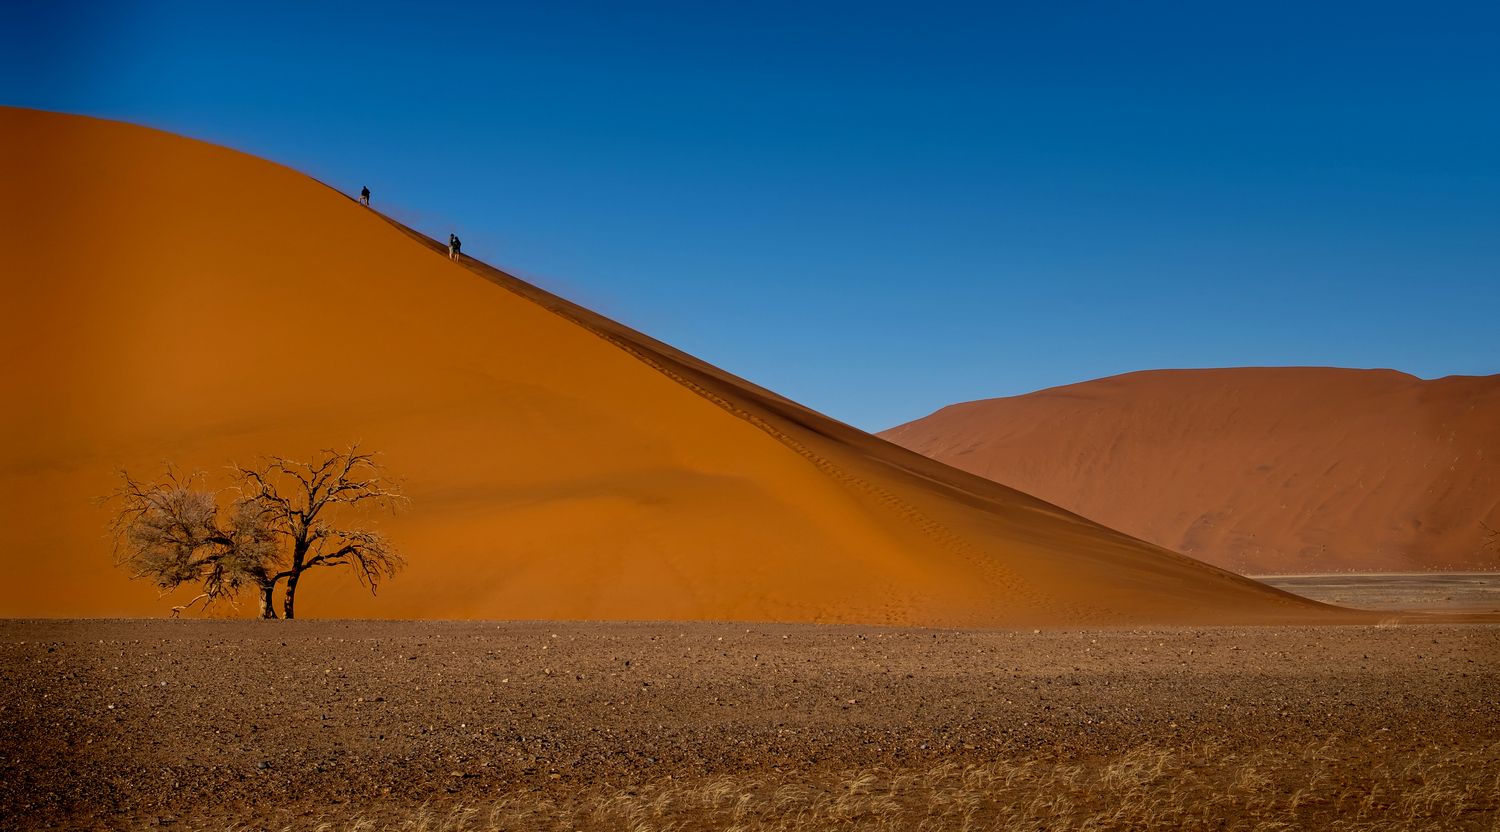 африка, намибия, соссусфлей, дюна, пустыня, намибия нд, песок, africa, нд, namibia, sossusflei, dune, desert, sand, пейзаж, природа, Демкина Надежда